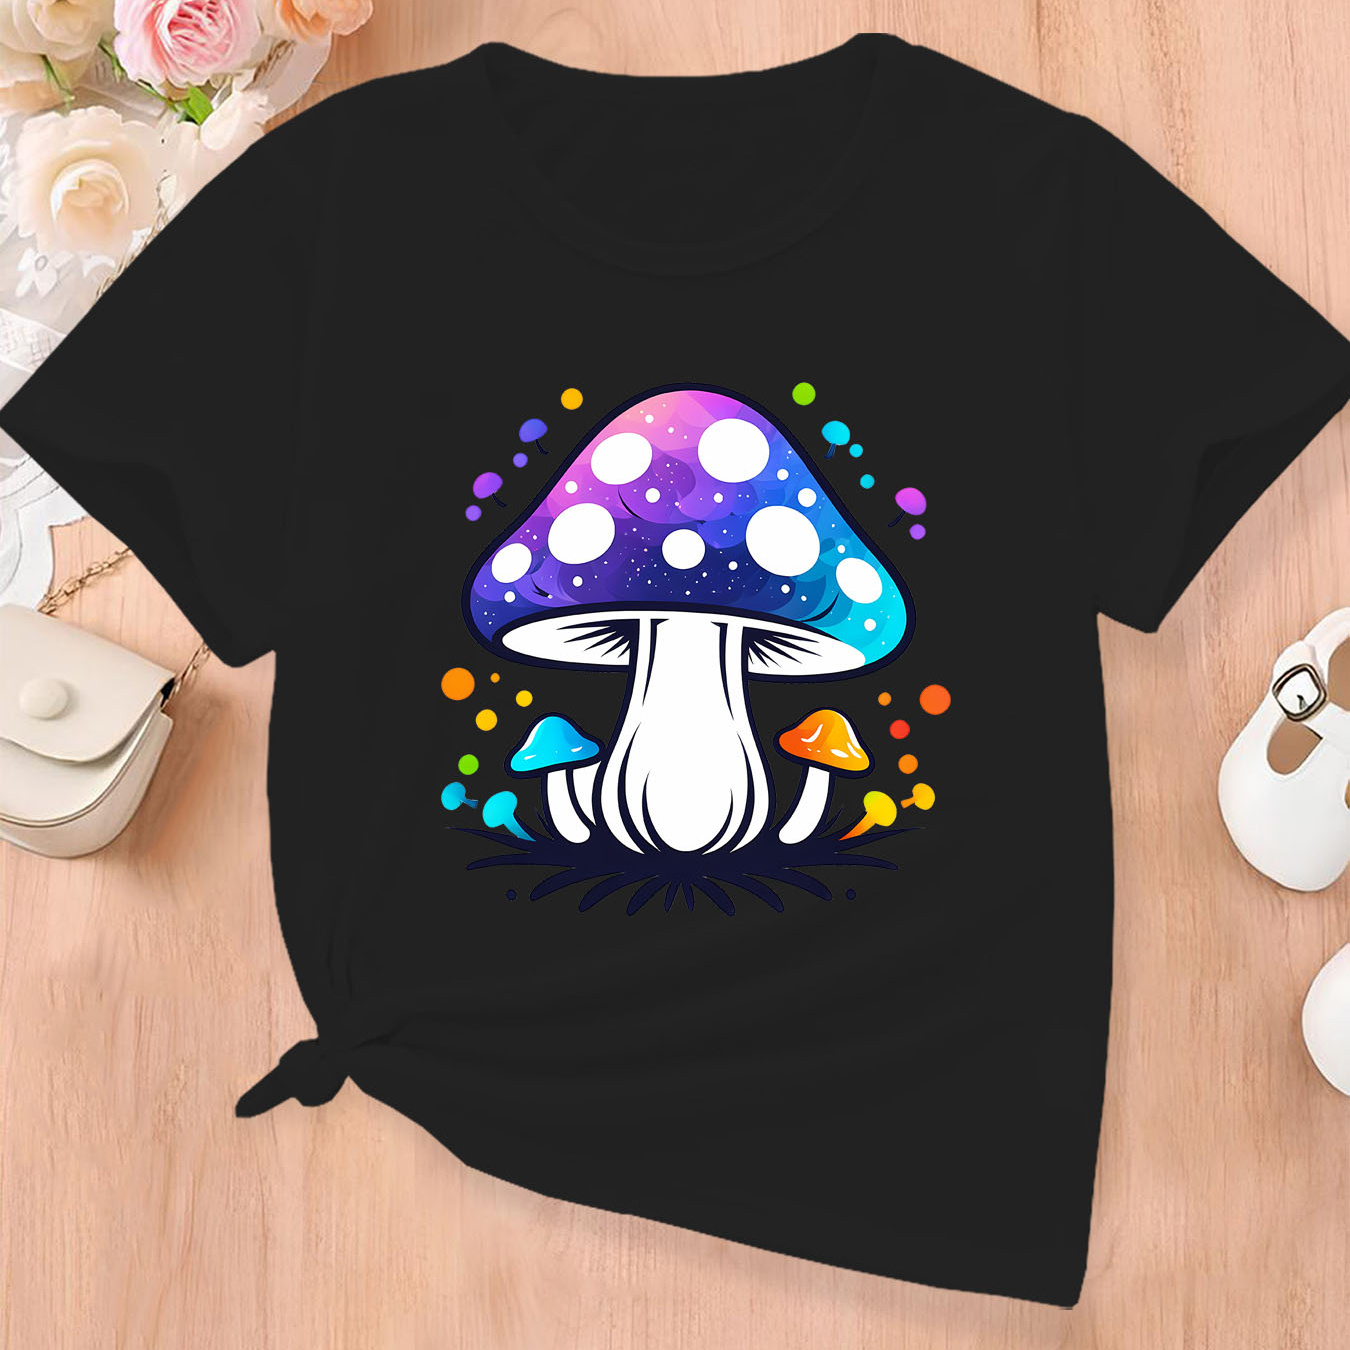 

Mushroom Graphic Print Creative T-shirts, Soft & Elastic Comfy Crew Neck Short Sleeve Tee, Girls' Summer Tops